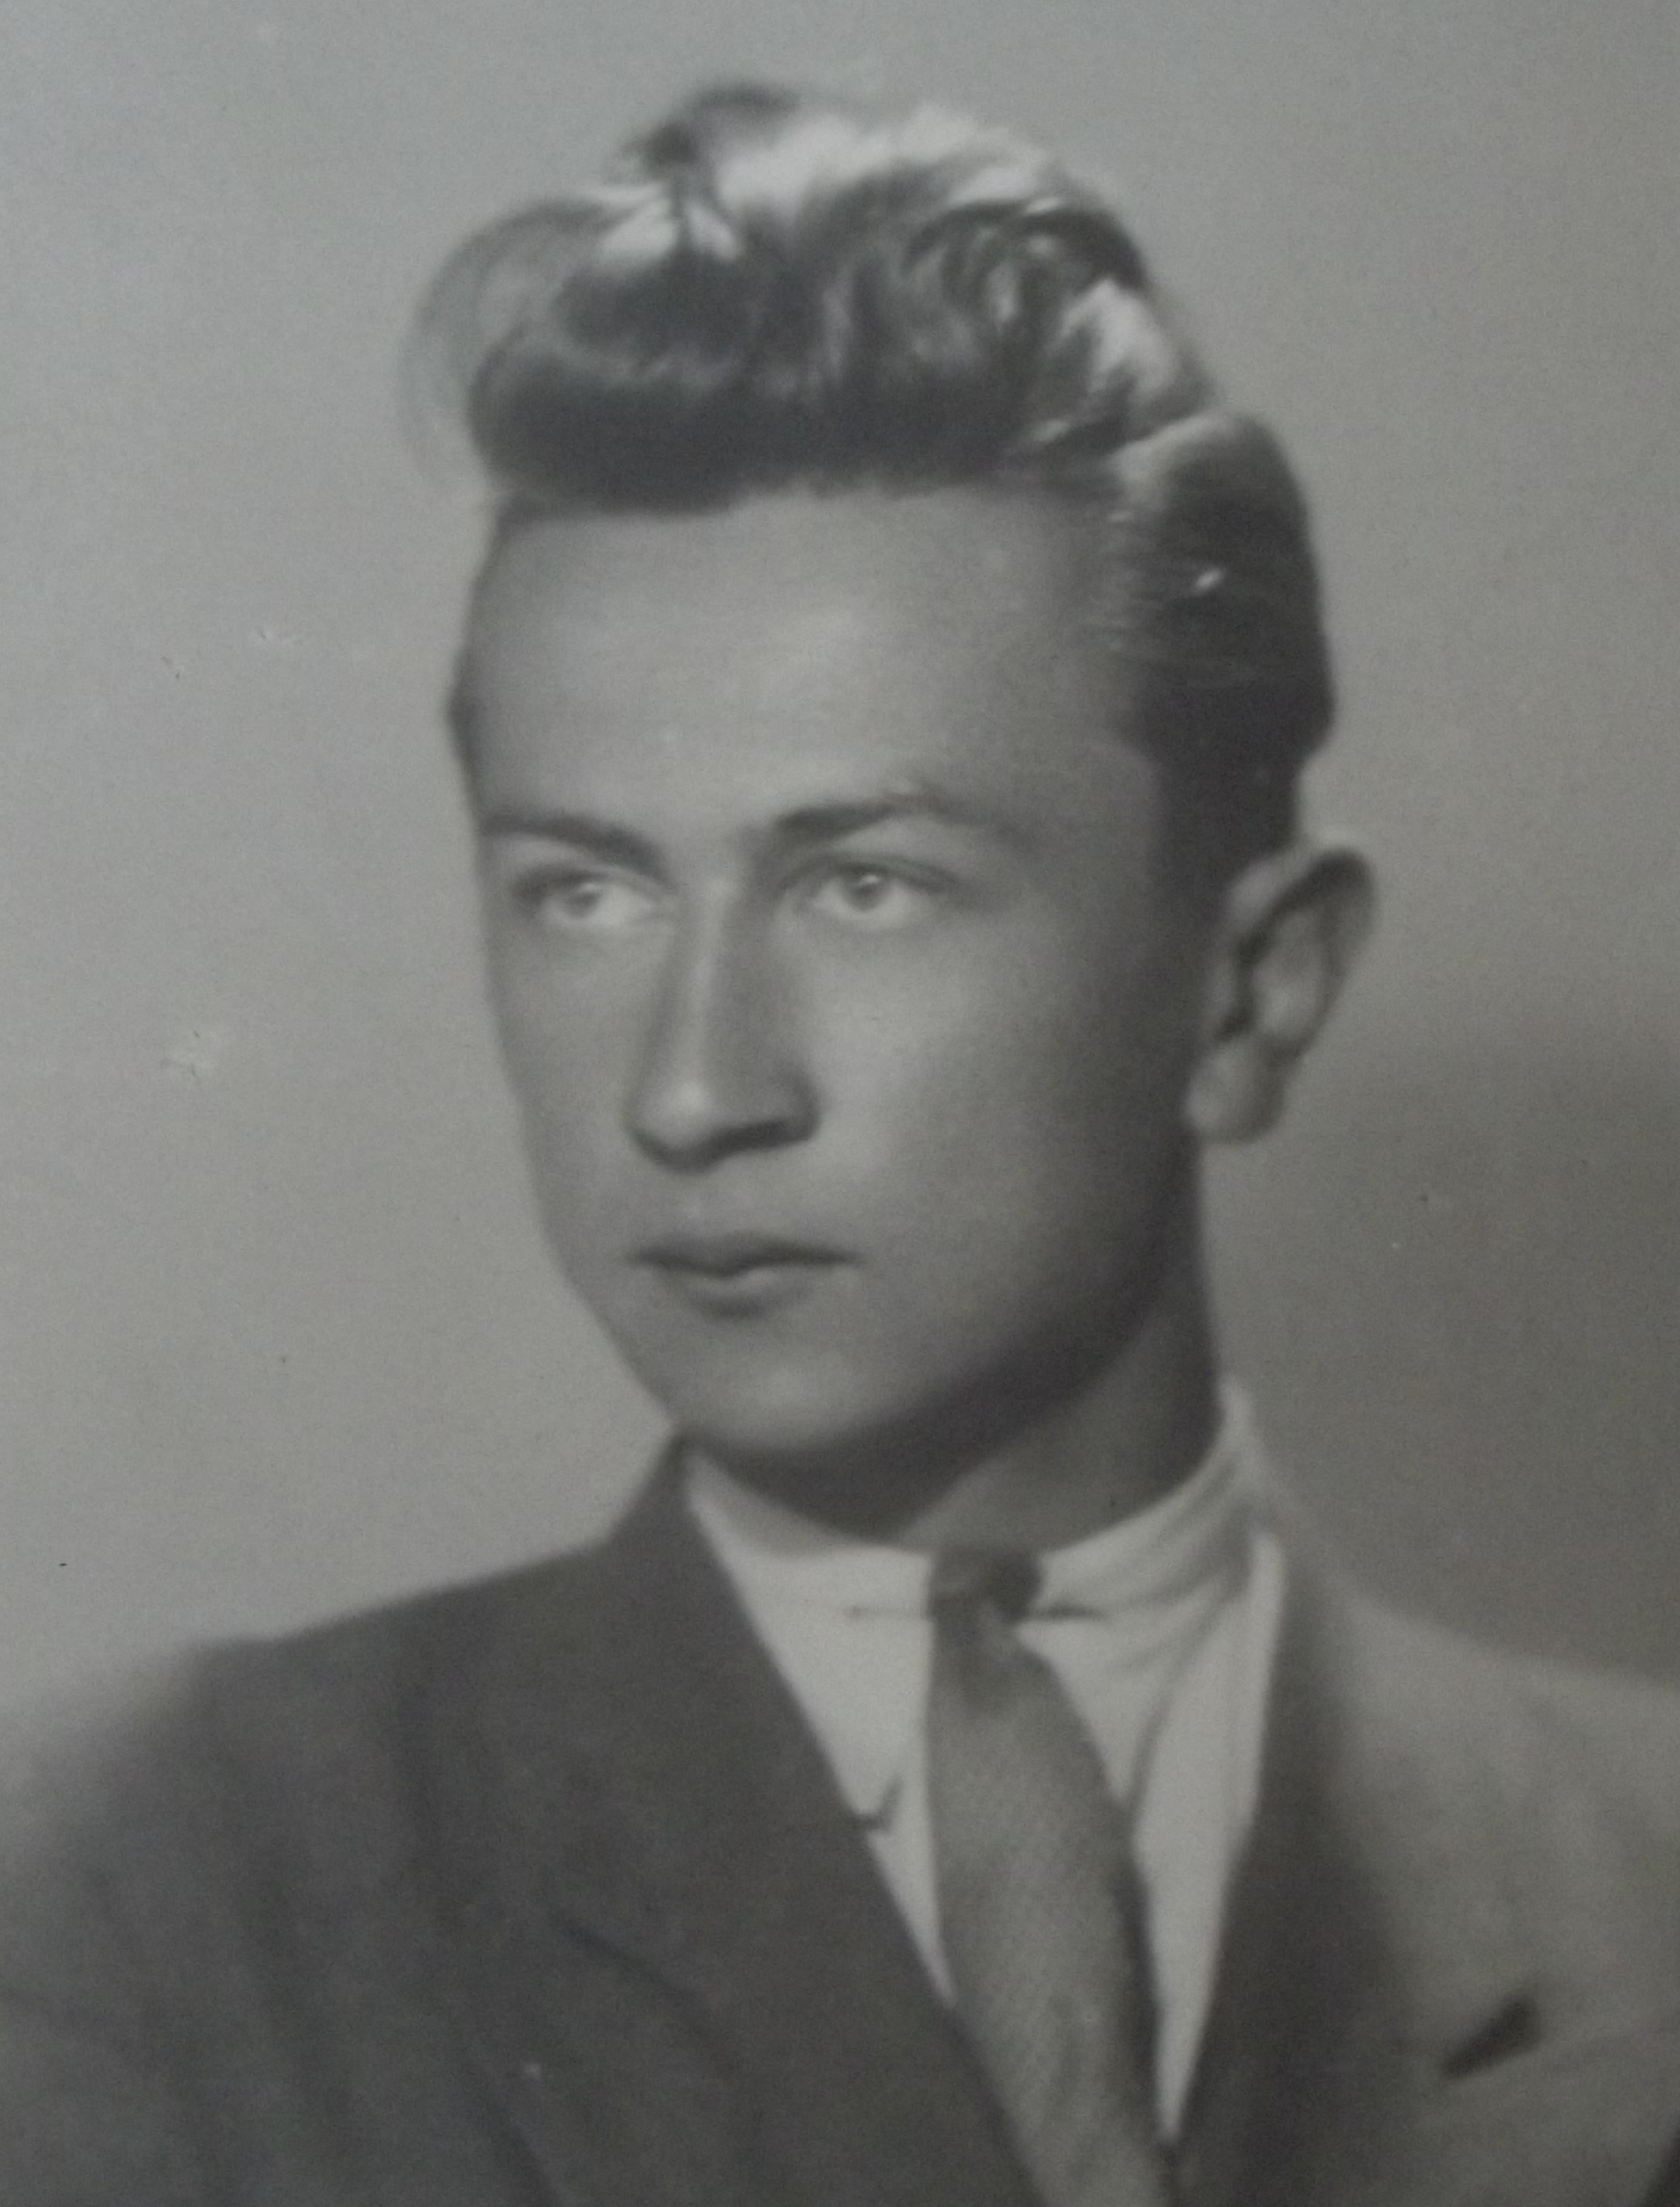 Václav Daněk, temporary portrait